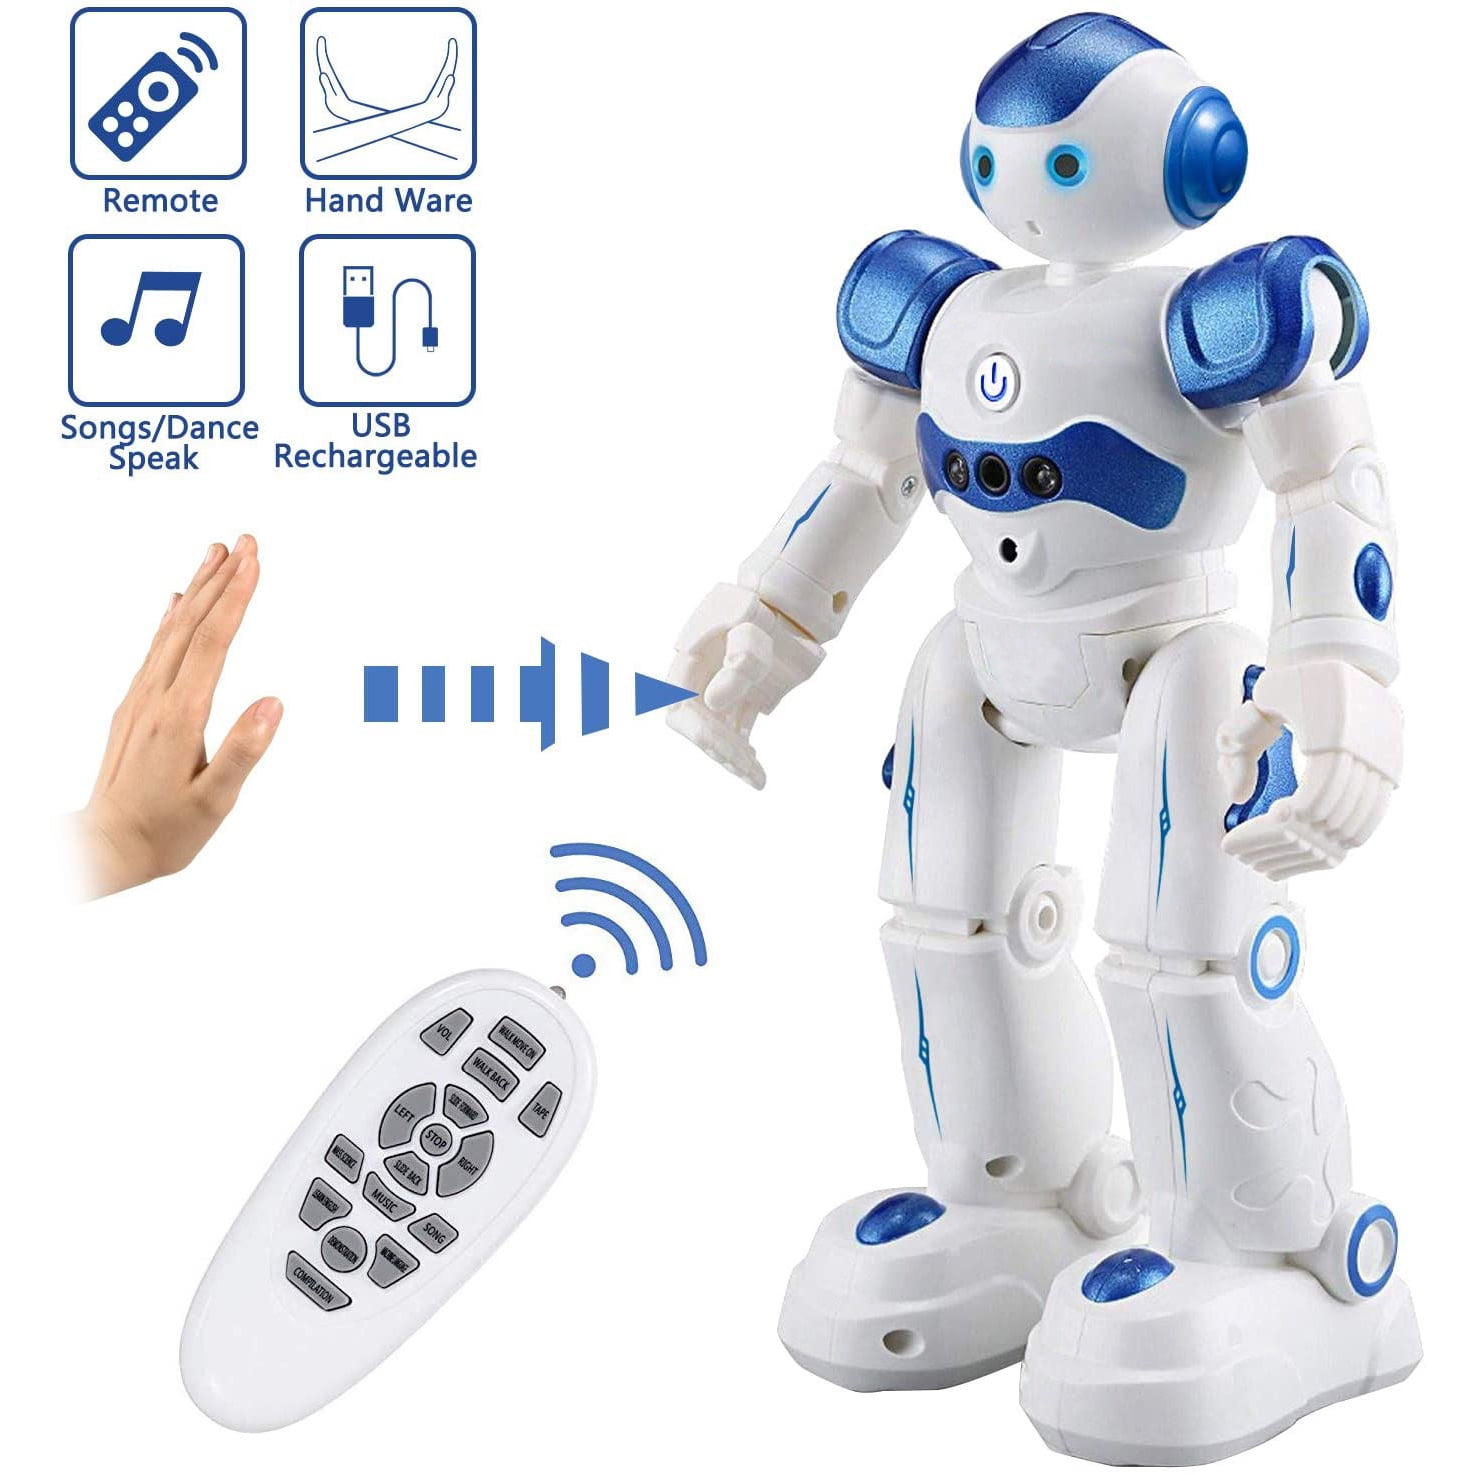 Walks Smart Robot Remote Control Intelligent Toy Gift for Kids Dances Sings 